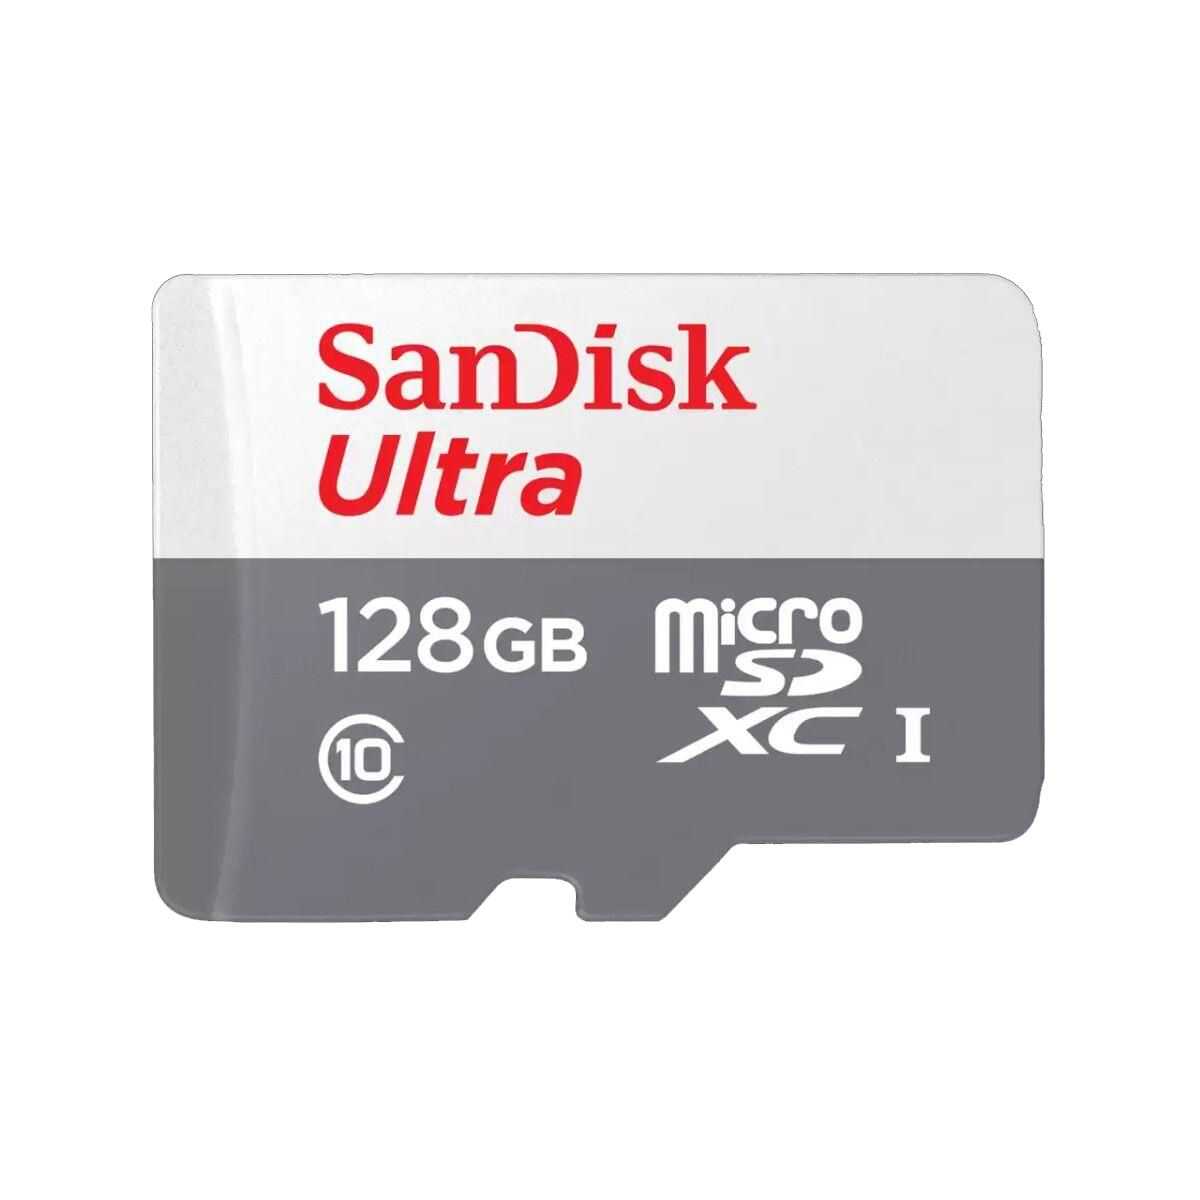 SanDisk Ultra microSDXC UHS-I card, 128 GB - SDSQUNR-128G-GN3MA